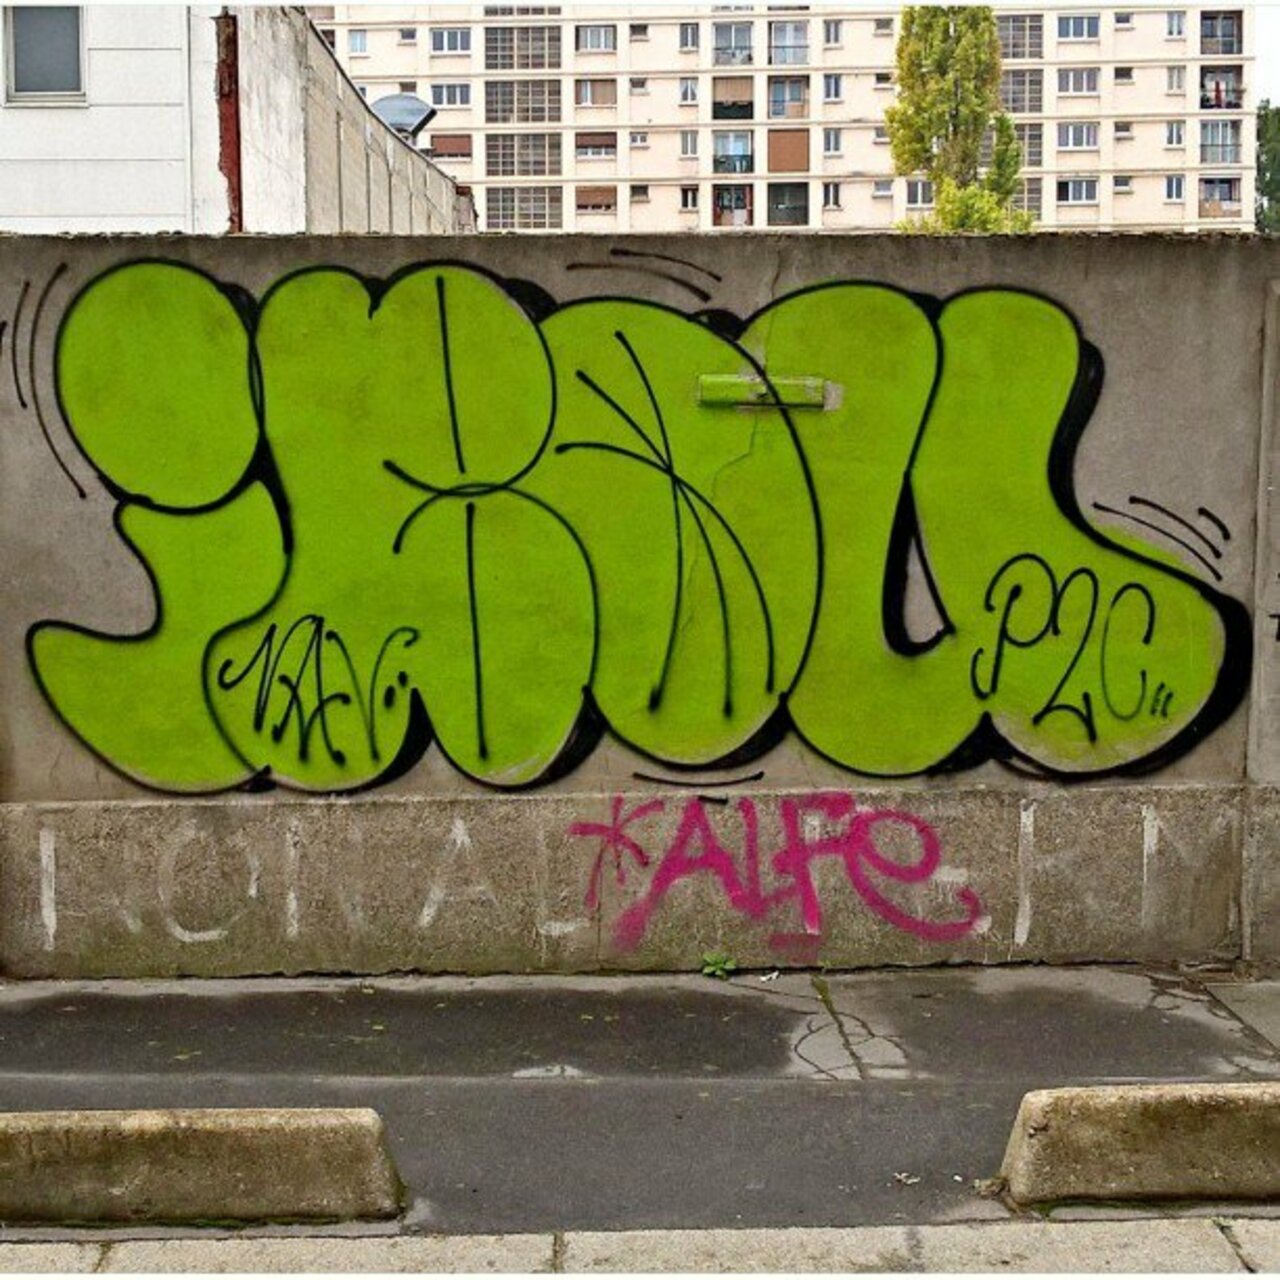 #Paris #graffiti photo by @maxdimontemarciano http://ift.tt/1O3DscY #StreetArt https://t.co/a53kK2JRMk